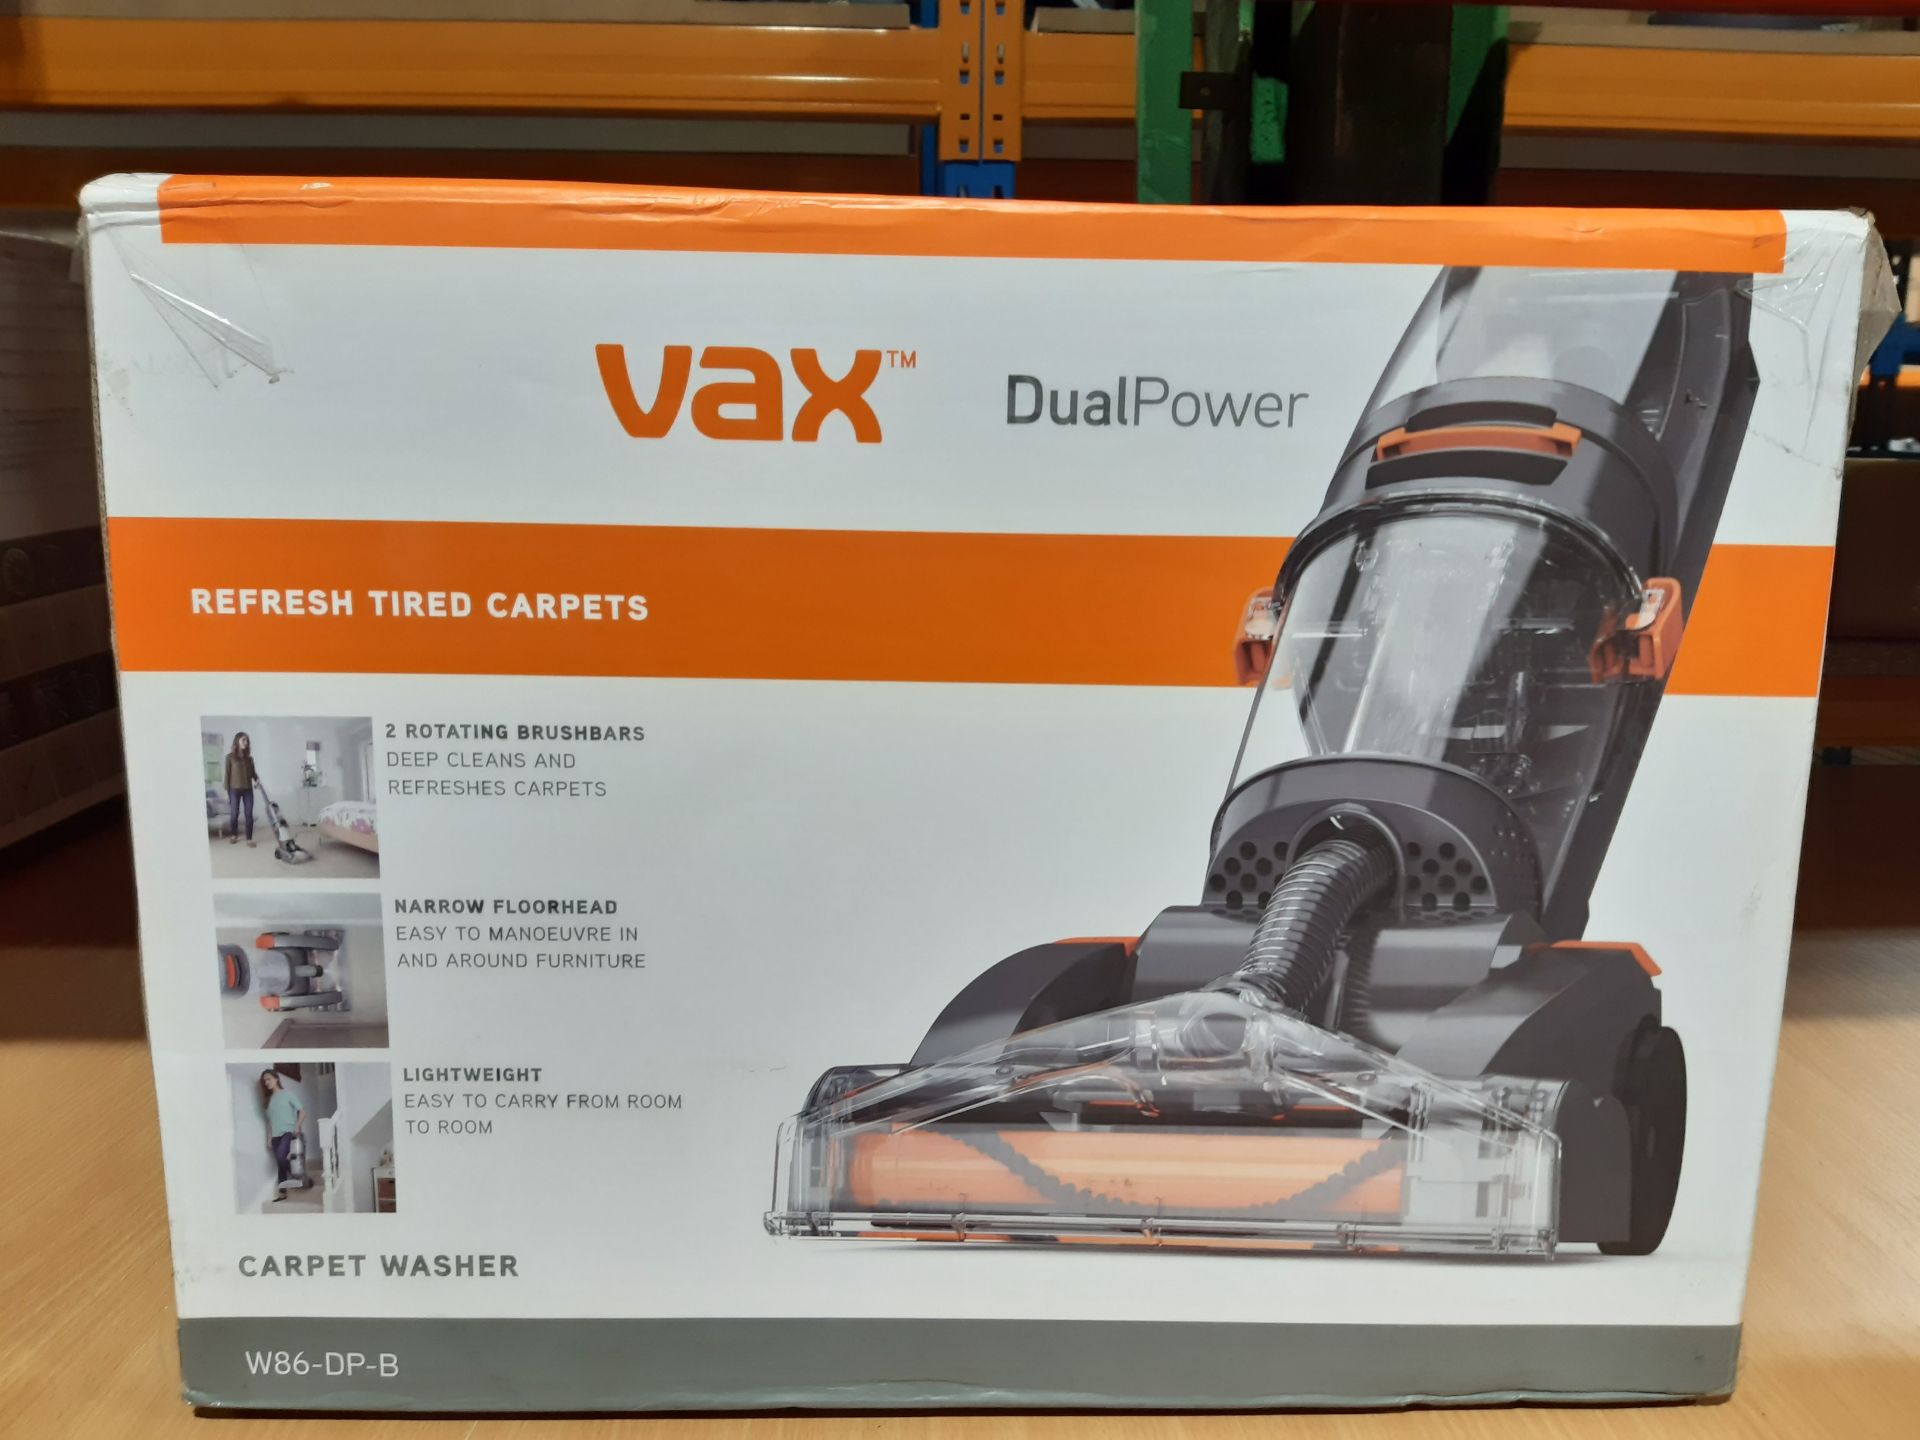 RRP £94.99 Vax W86-DP-B Dual Power Carpet Cleaner, 2.7 Litre, 800 W, Grey/Orange